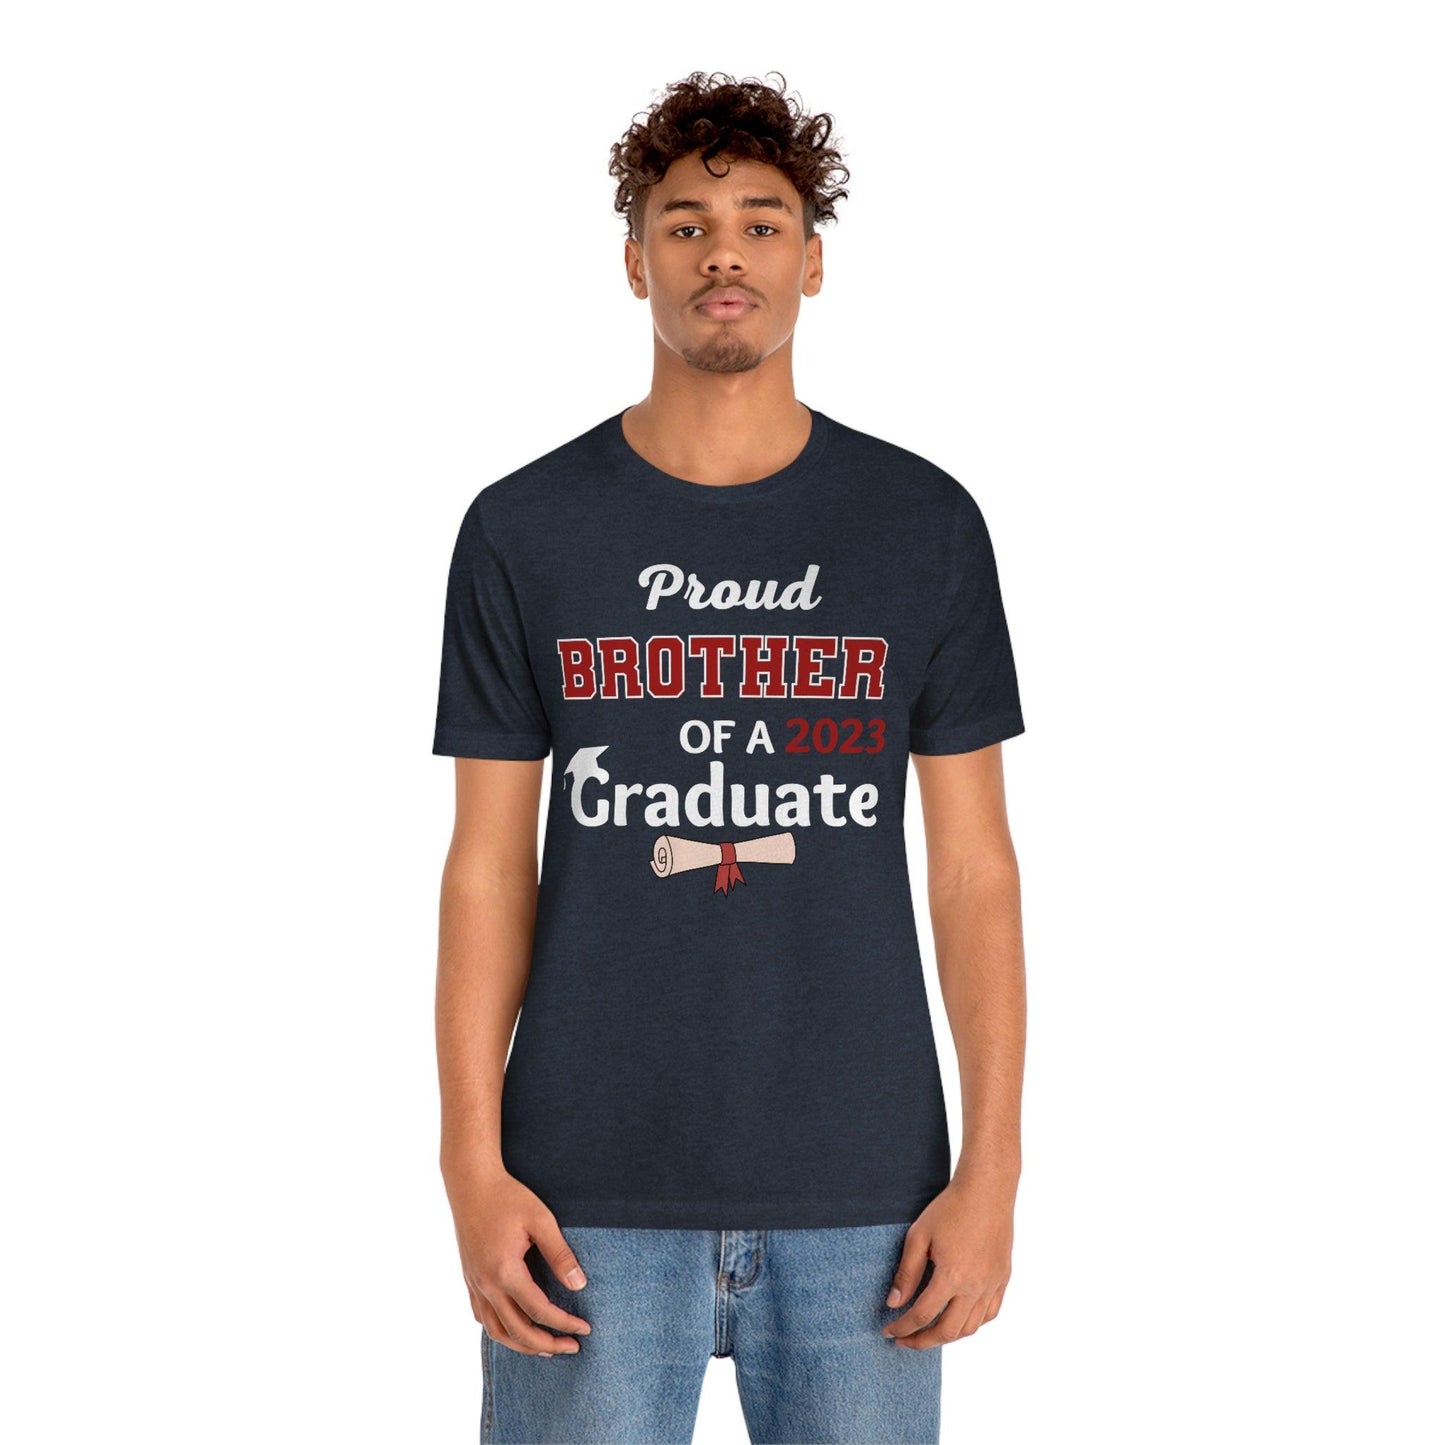 Proud Brother of a graduate - Graduation shirt - Graduation gift